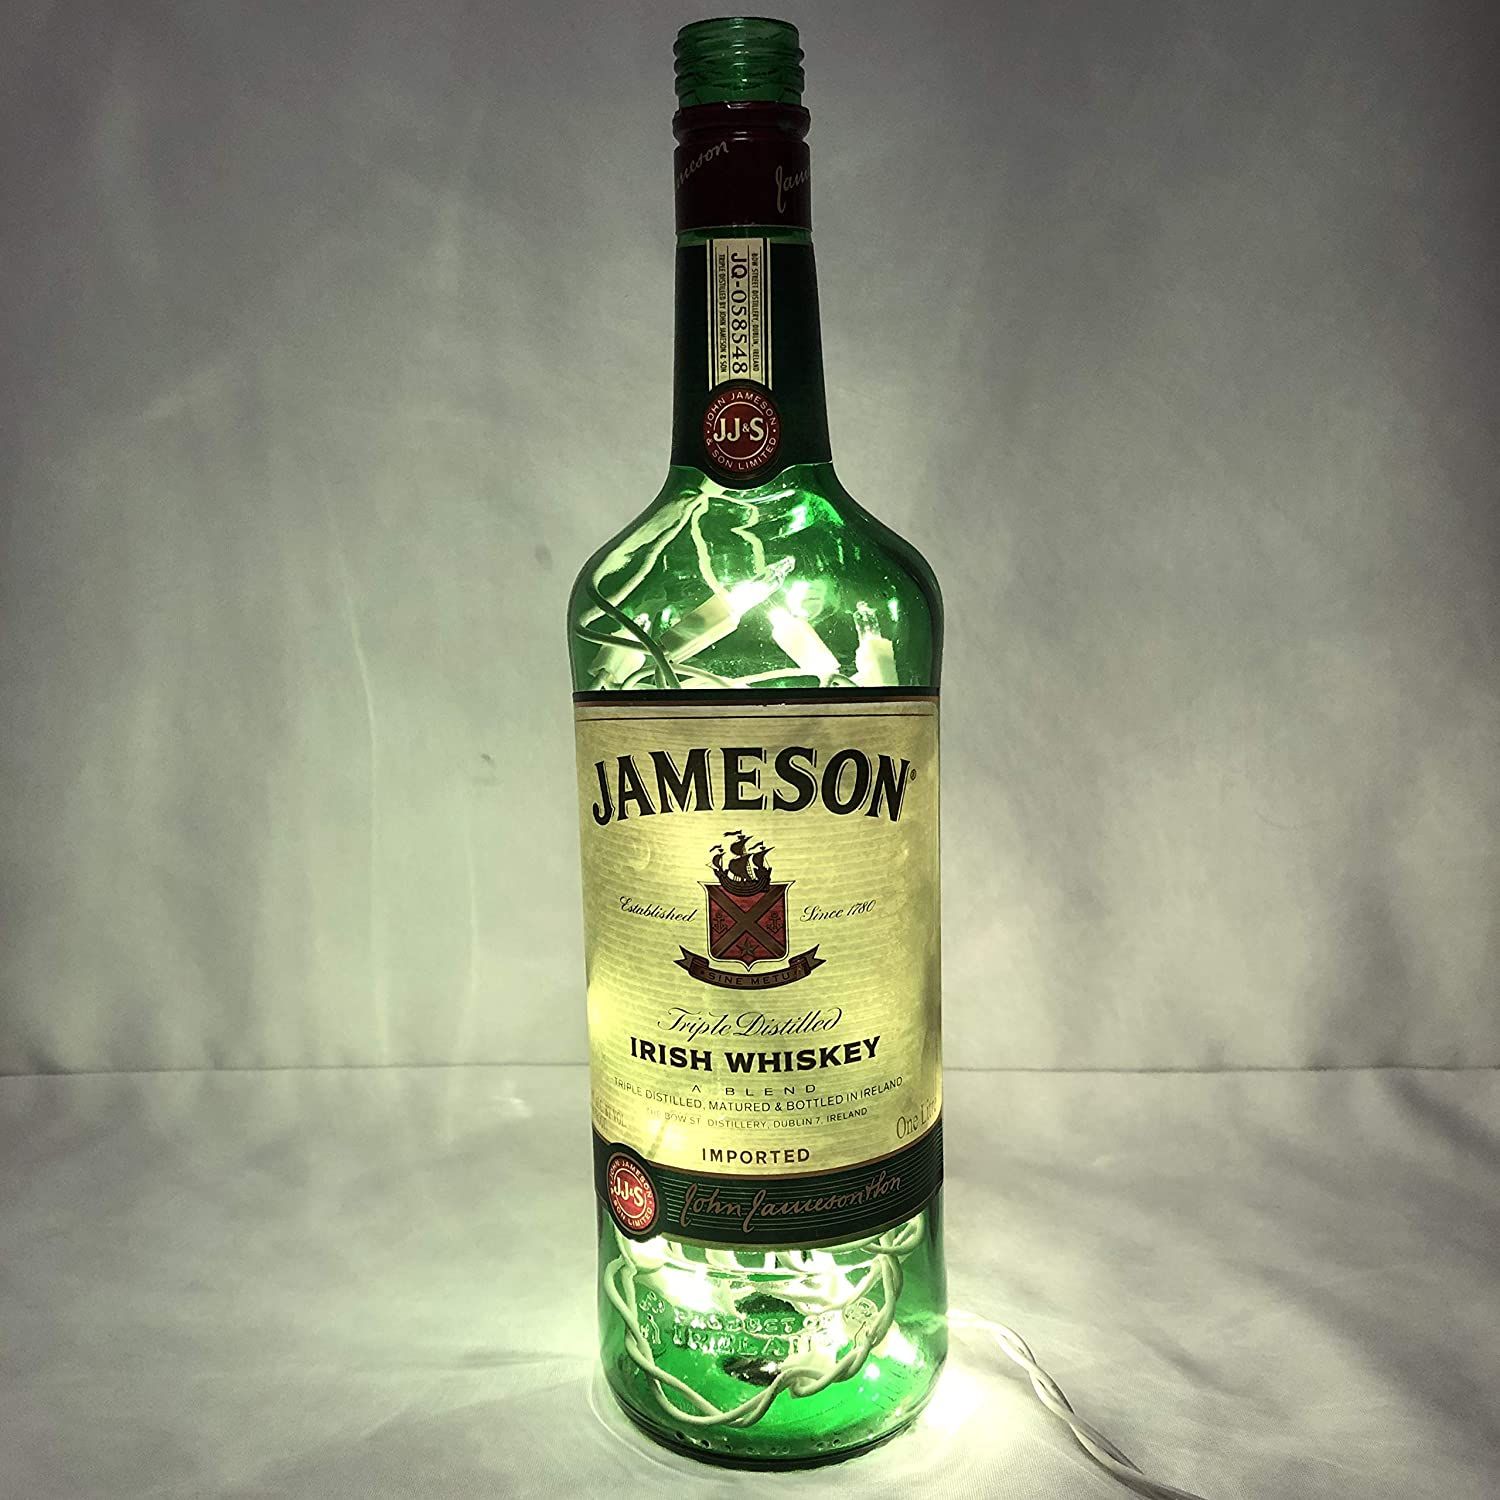 11.ब्रँड : Jameson, देश: आयर्लंड, सेल: 8,100 (Photo - amazon)